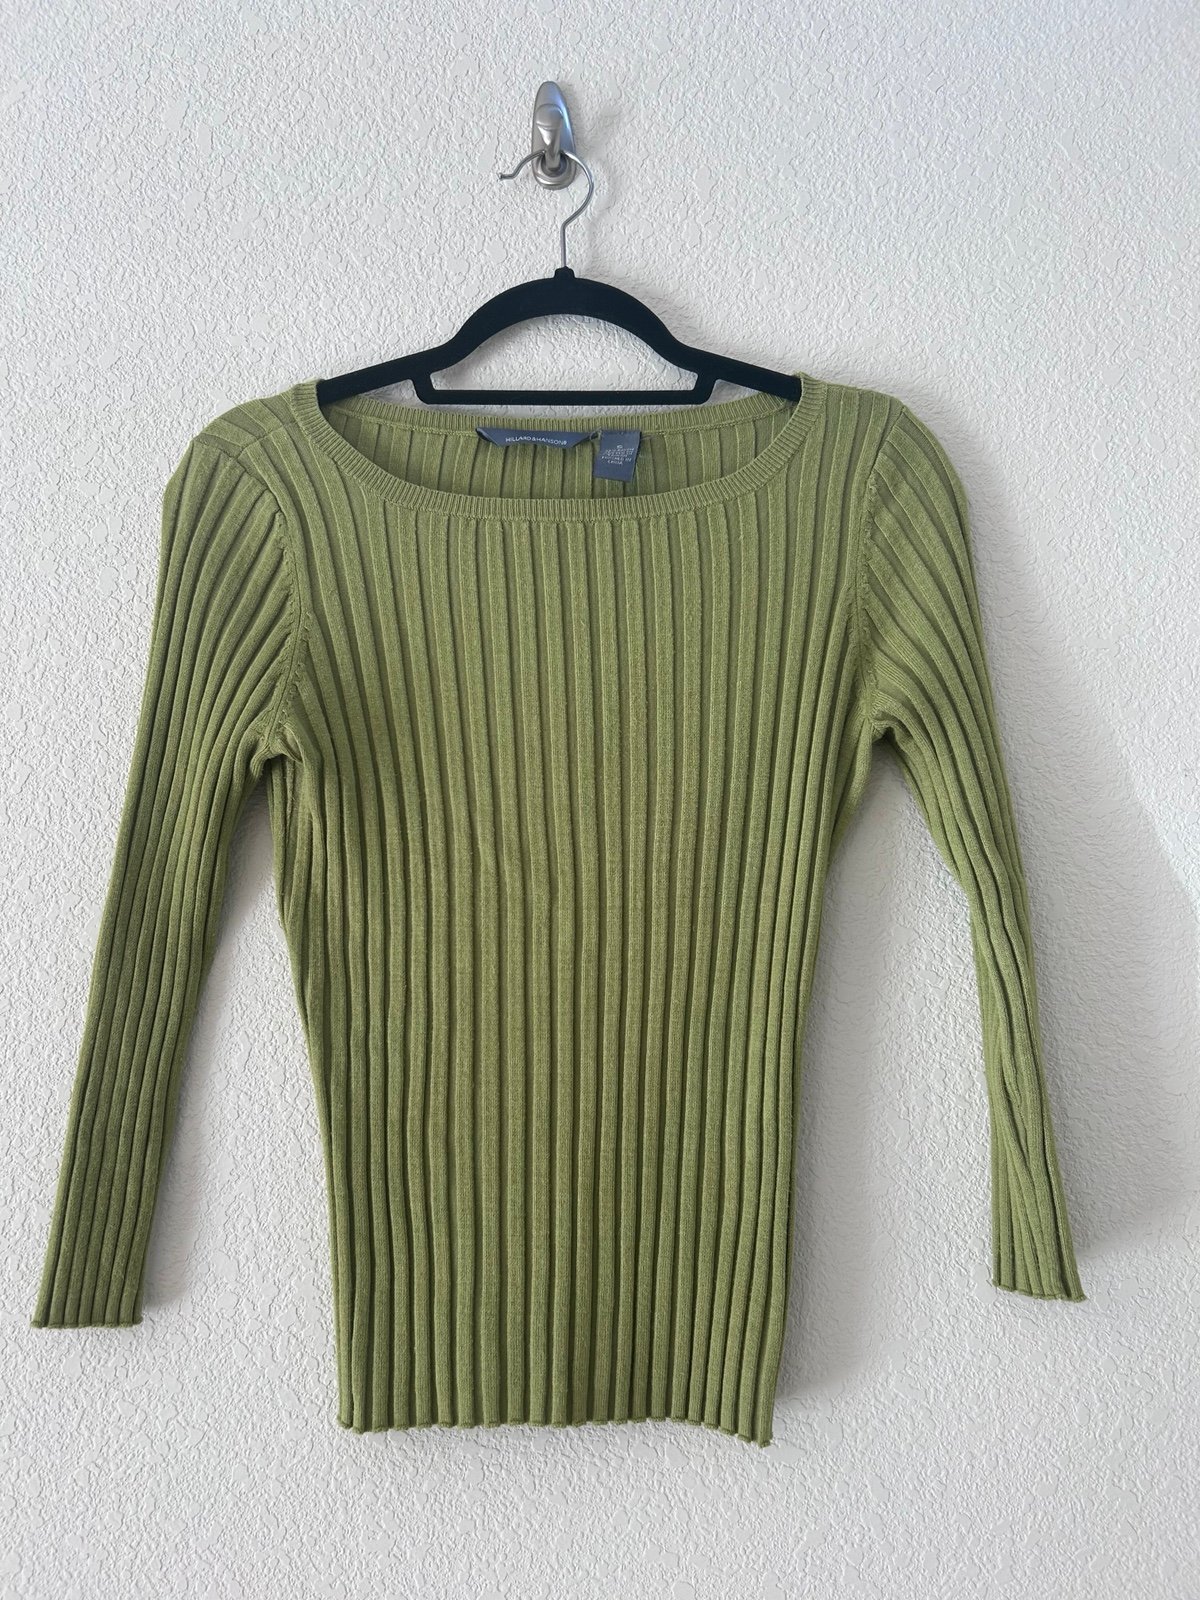 Hillard & Hanson Vintage Bright Green Ribbed Sweater Si